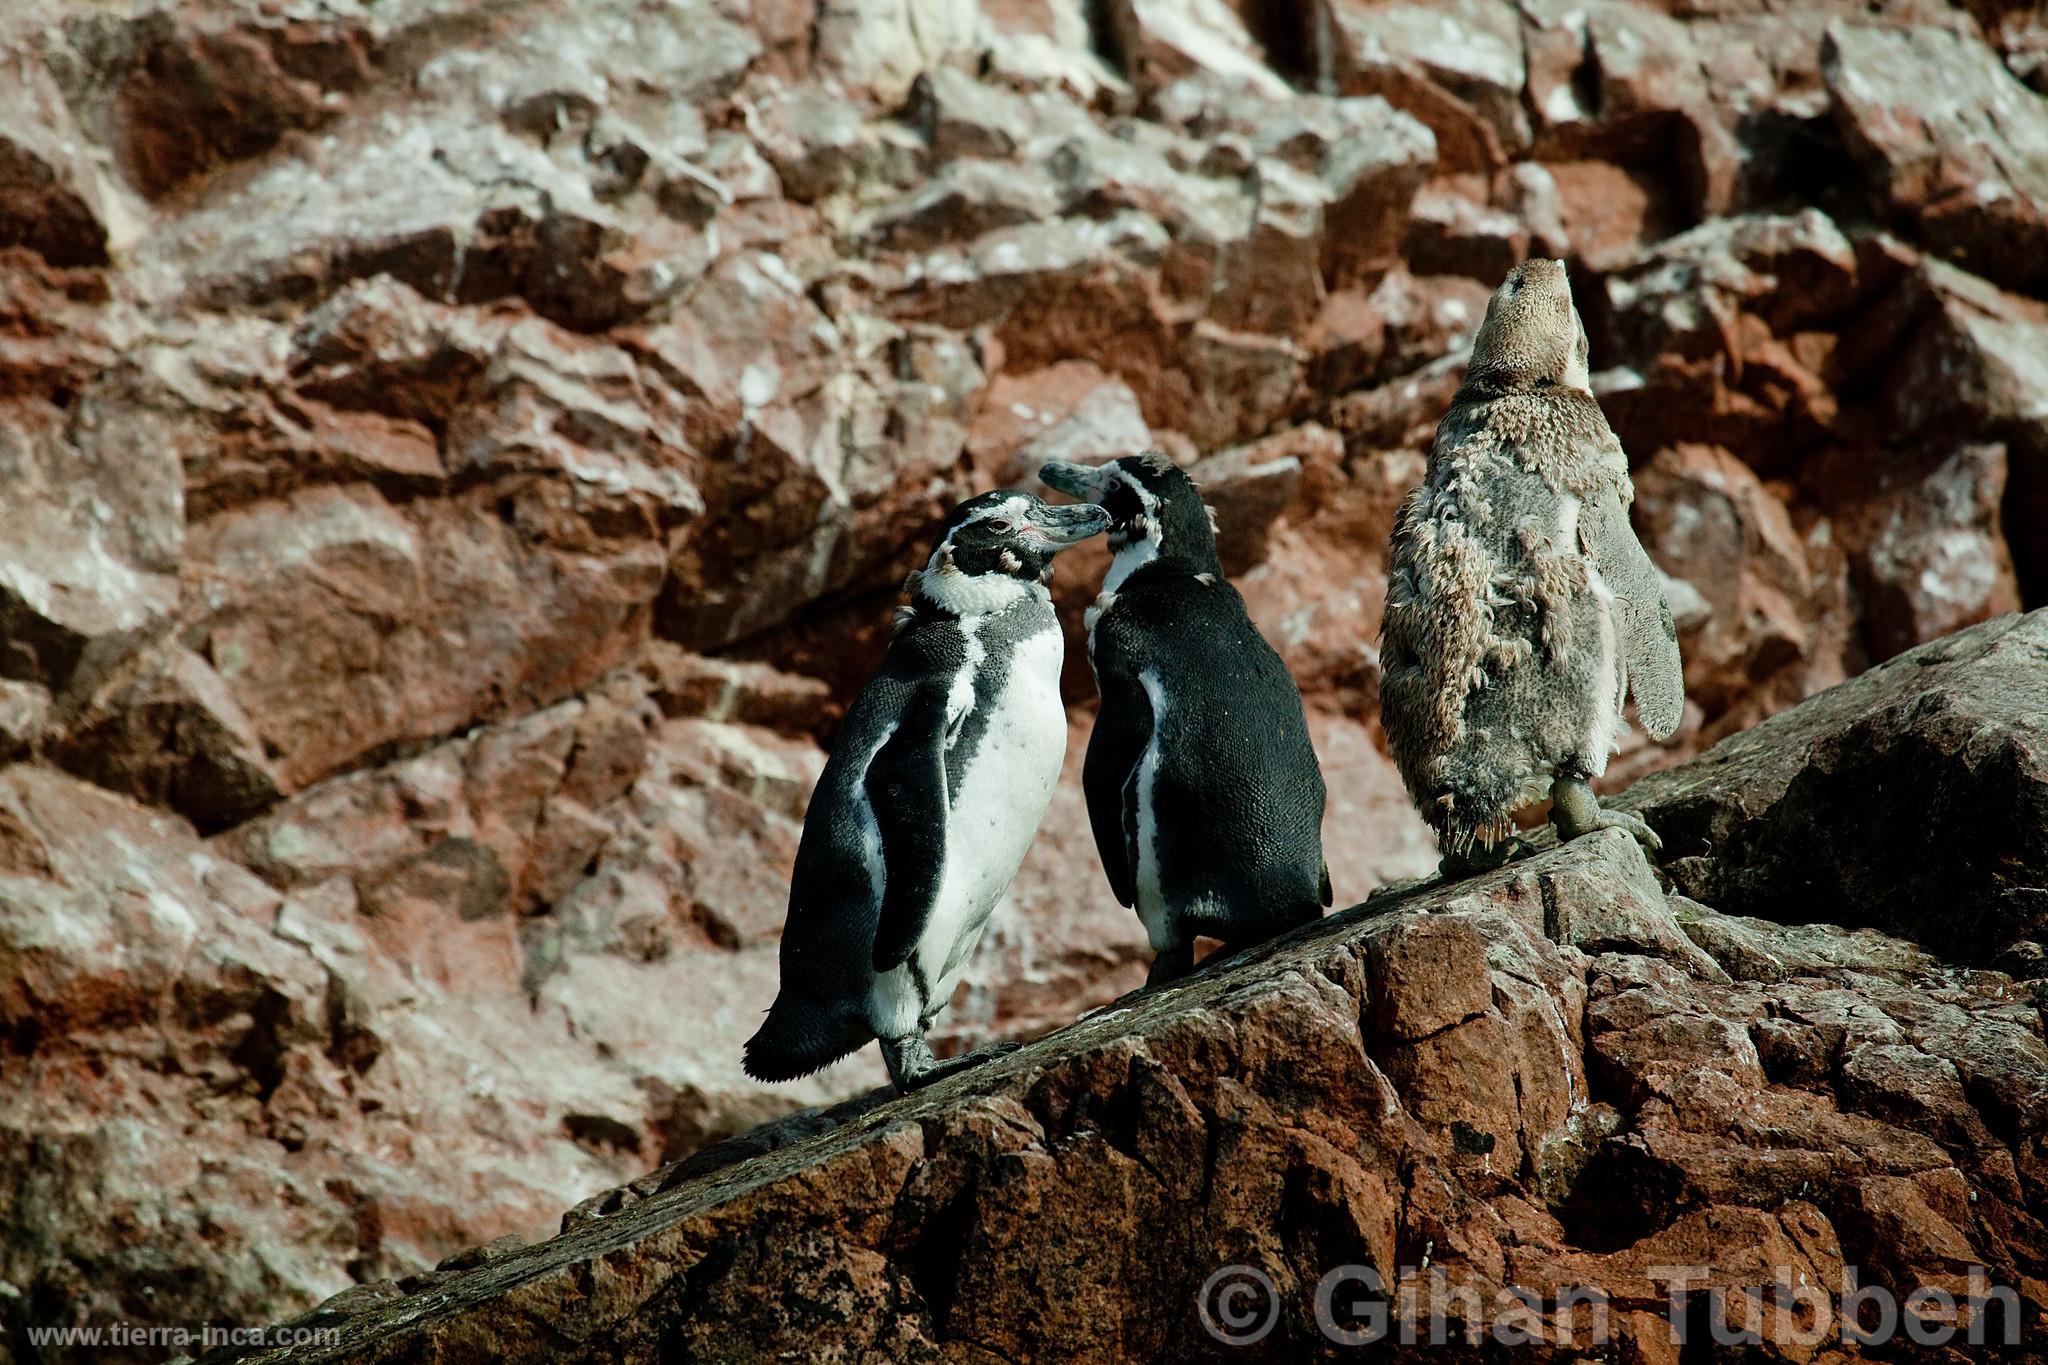 Pinginos de Humboldt